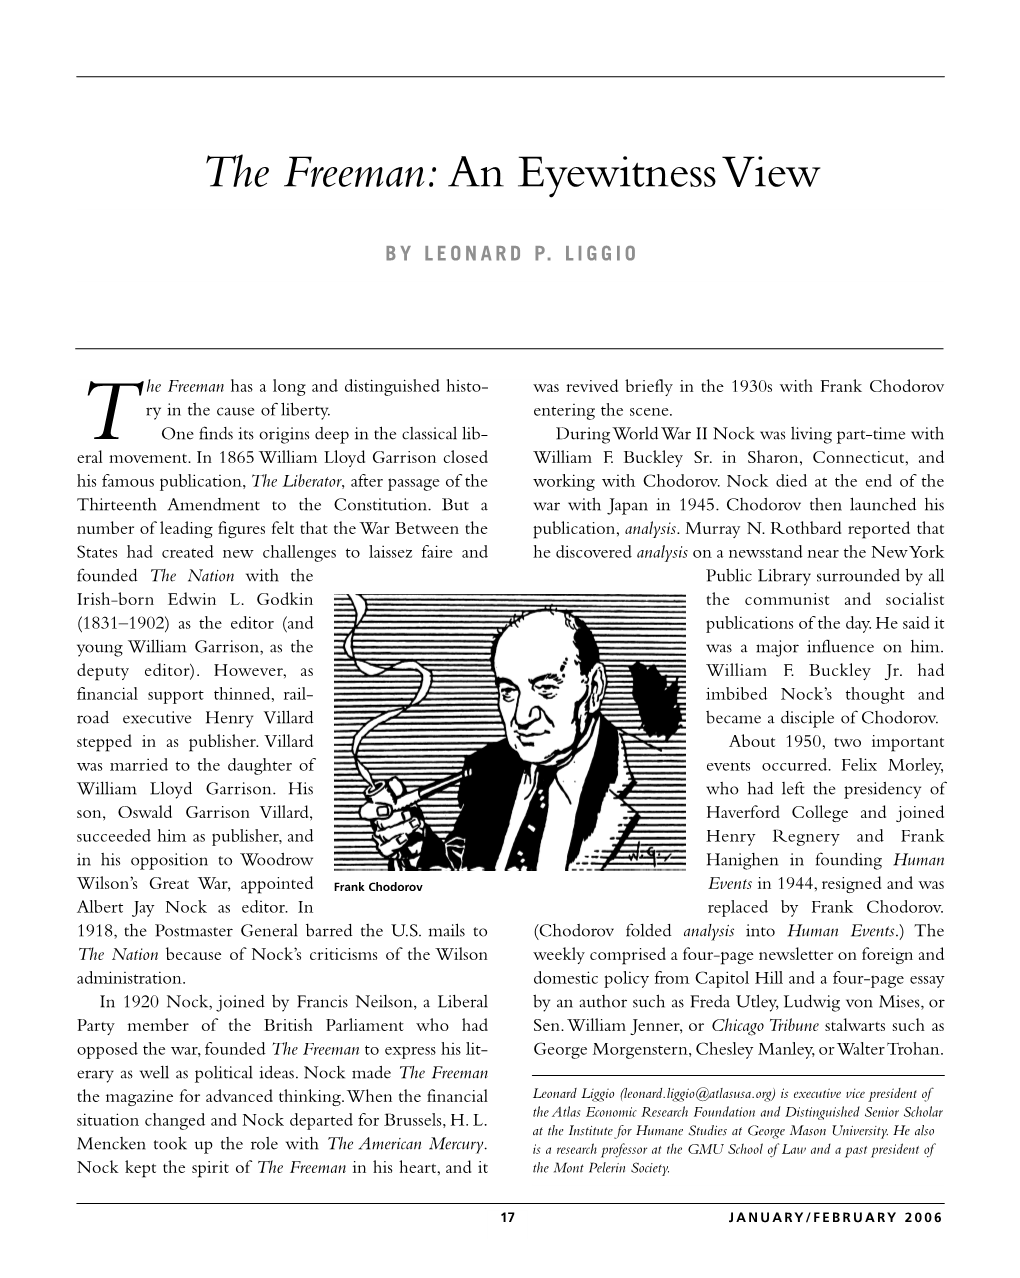 The Freeman: an Eyewitness View